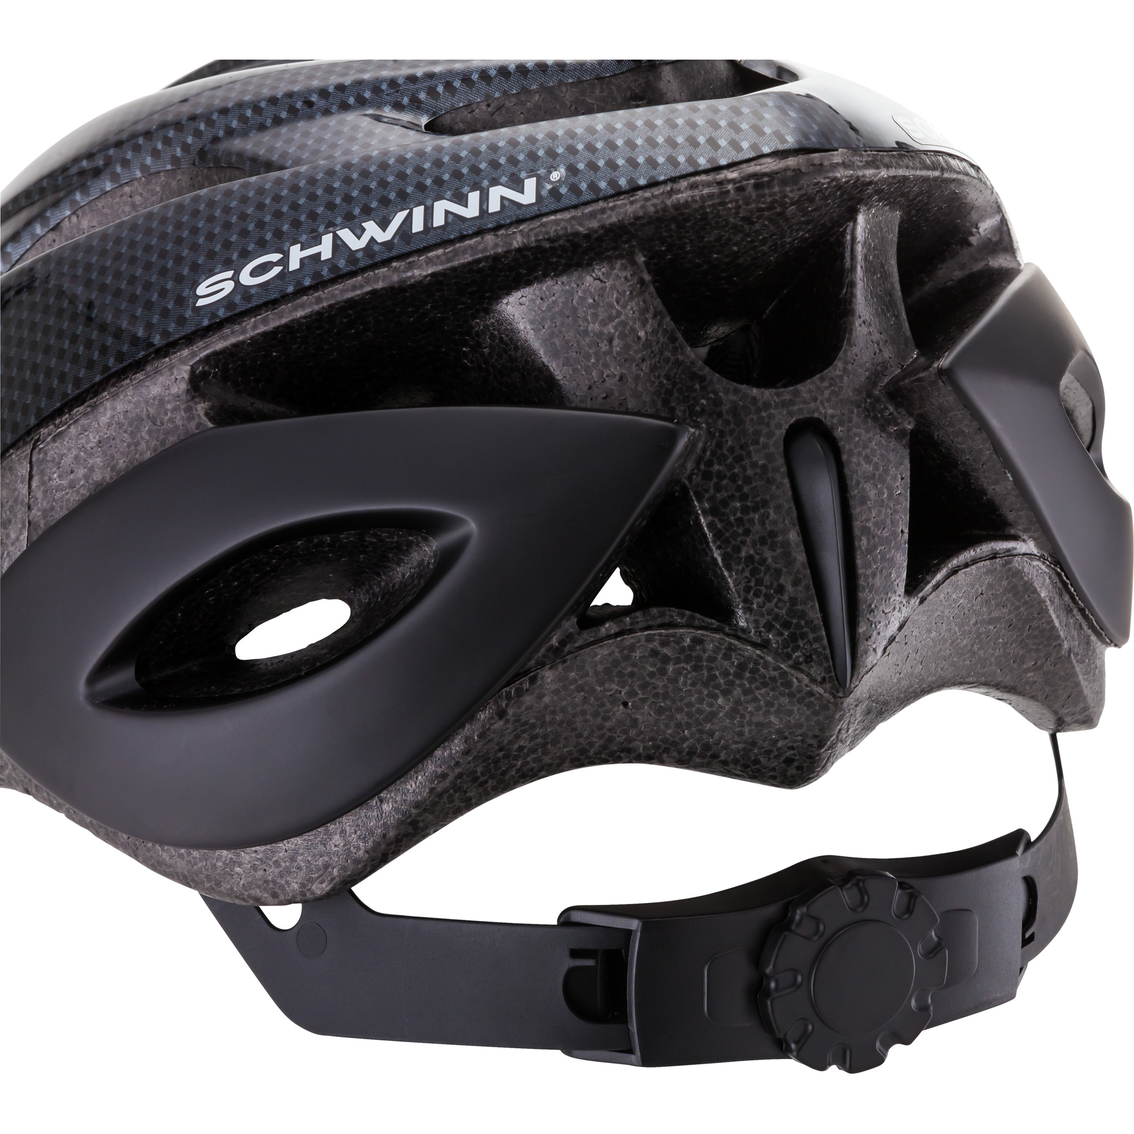 Schwinn Thrasher Adult Bike Helmet - Image 2 of 3